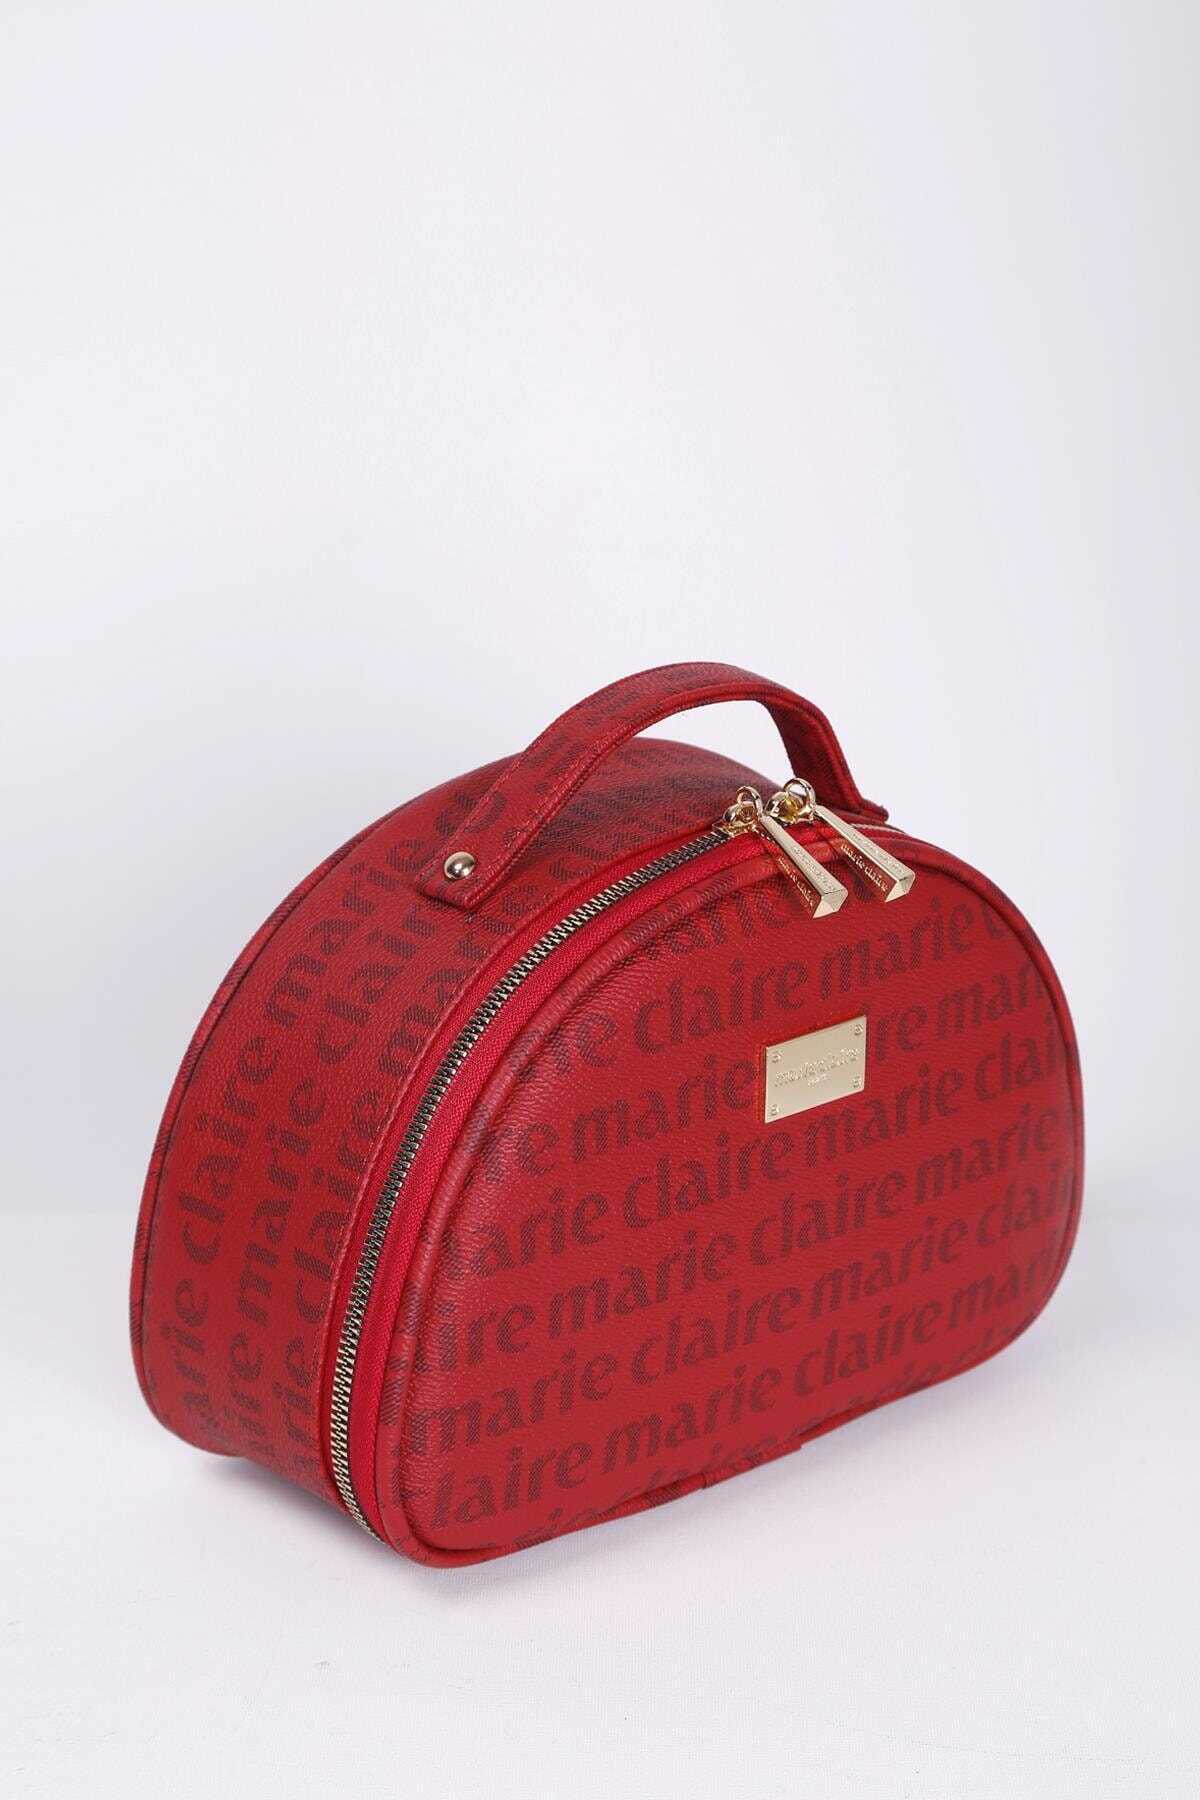  کیف لوازم آرایشی زنانه طرح دار چرم قرمز برند Marie Claire